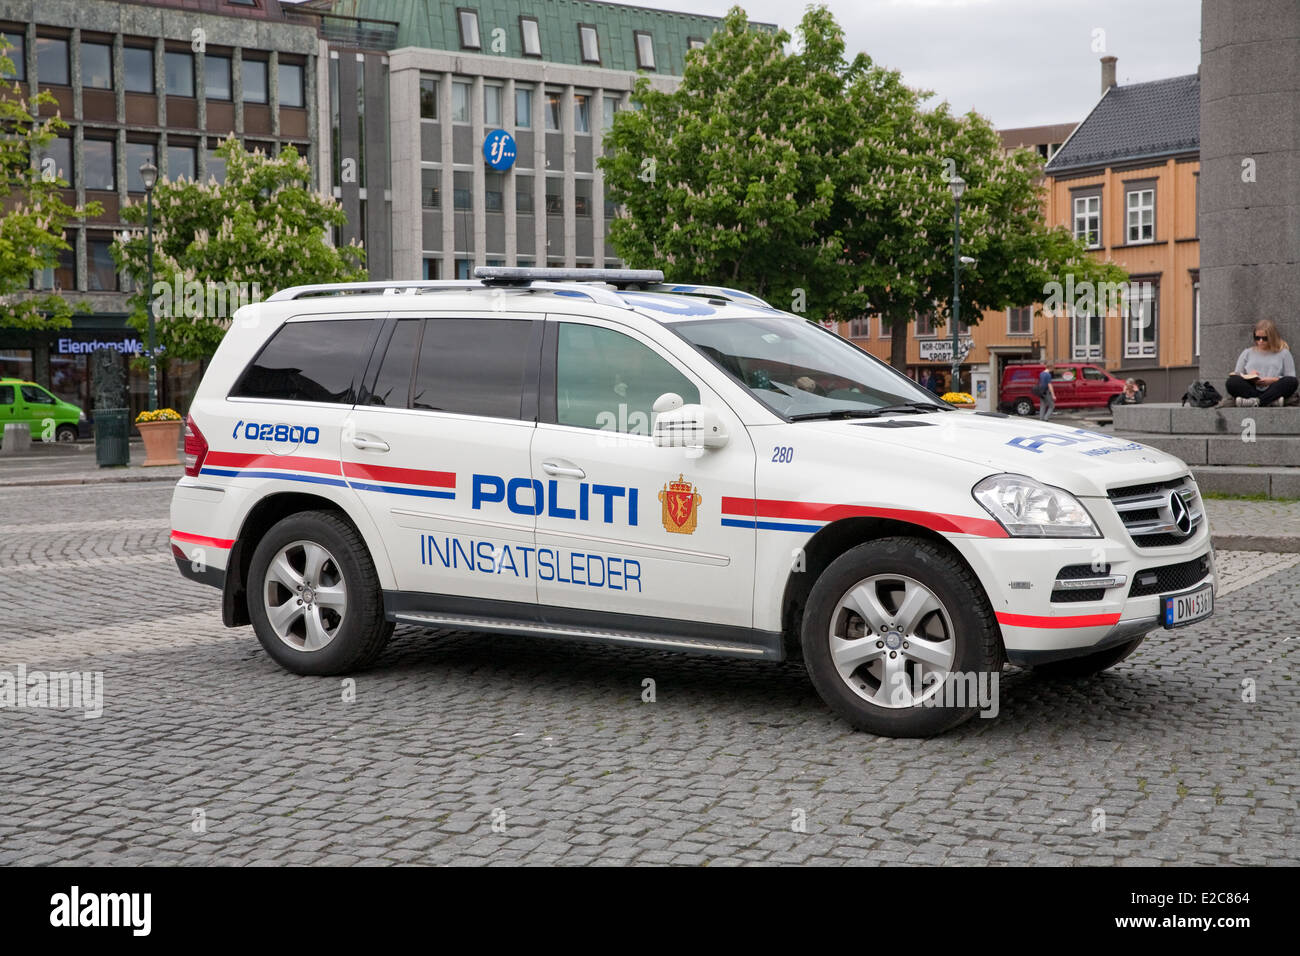 Police car, Politi, in Trondheim Norway Stock Photo - Alamy